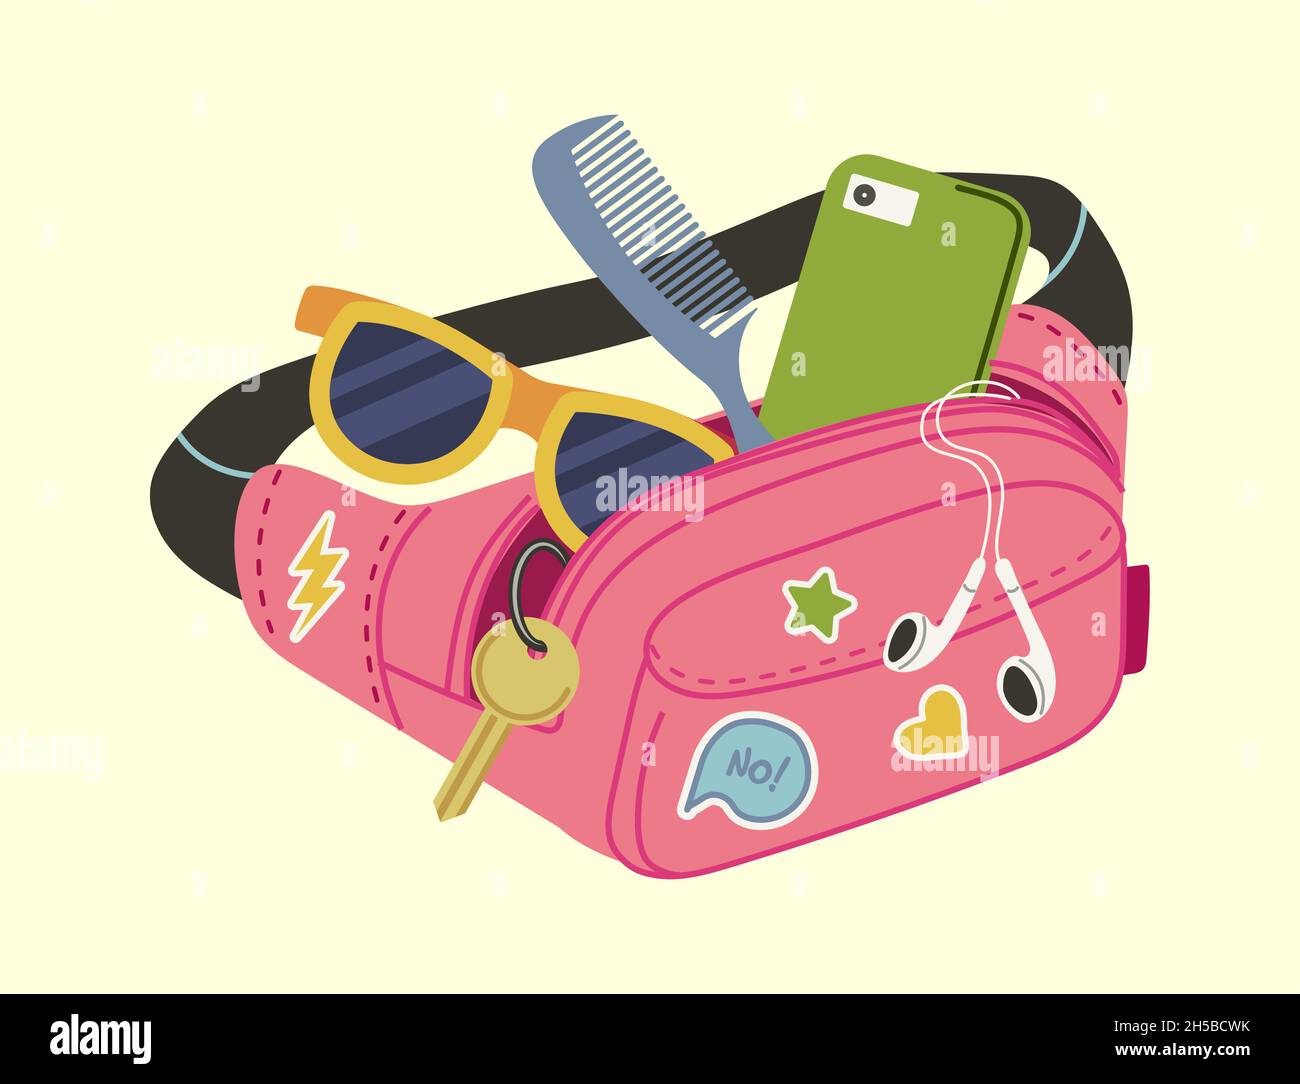 Cartoon Handbag Clipart Transparent Background, Cartoon Hand Painted  Illustration Fashion Handbag, Cartoon, Hand Draw, Illustration PNG Image  For Free Download